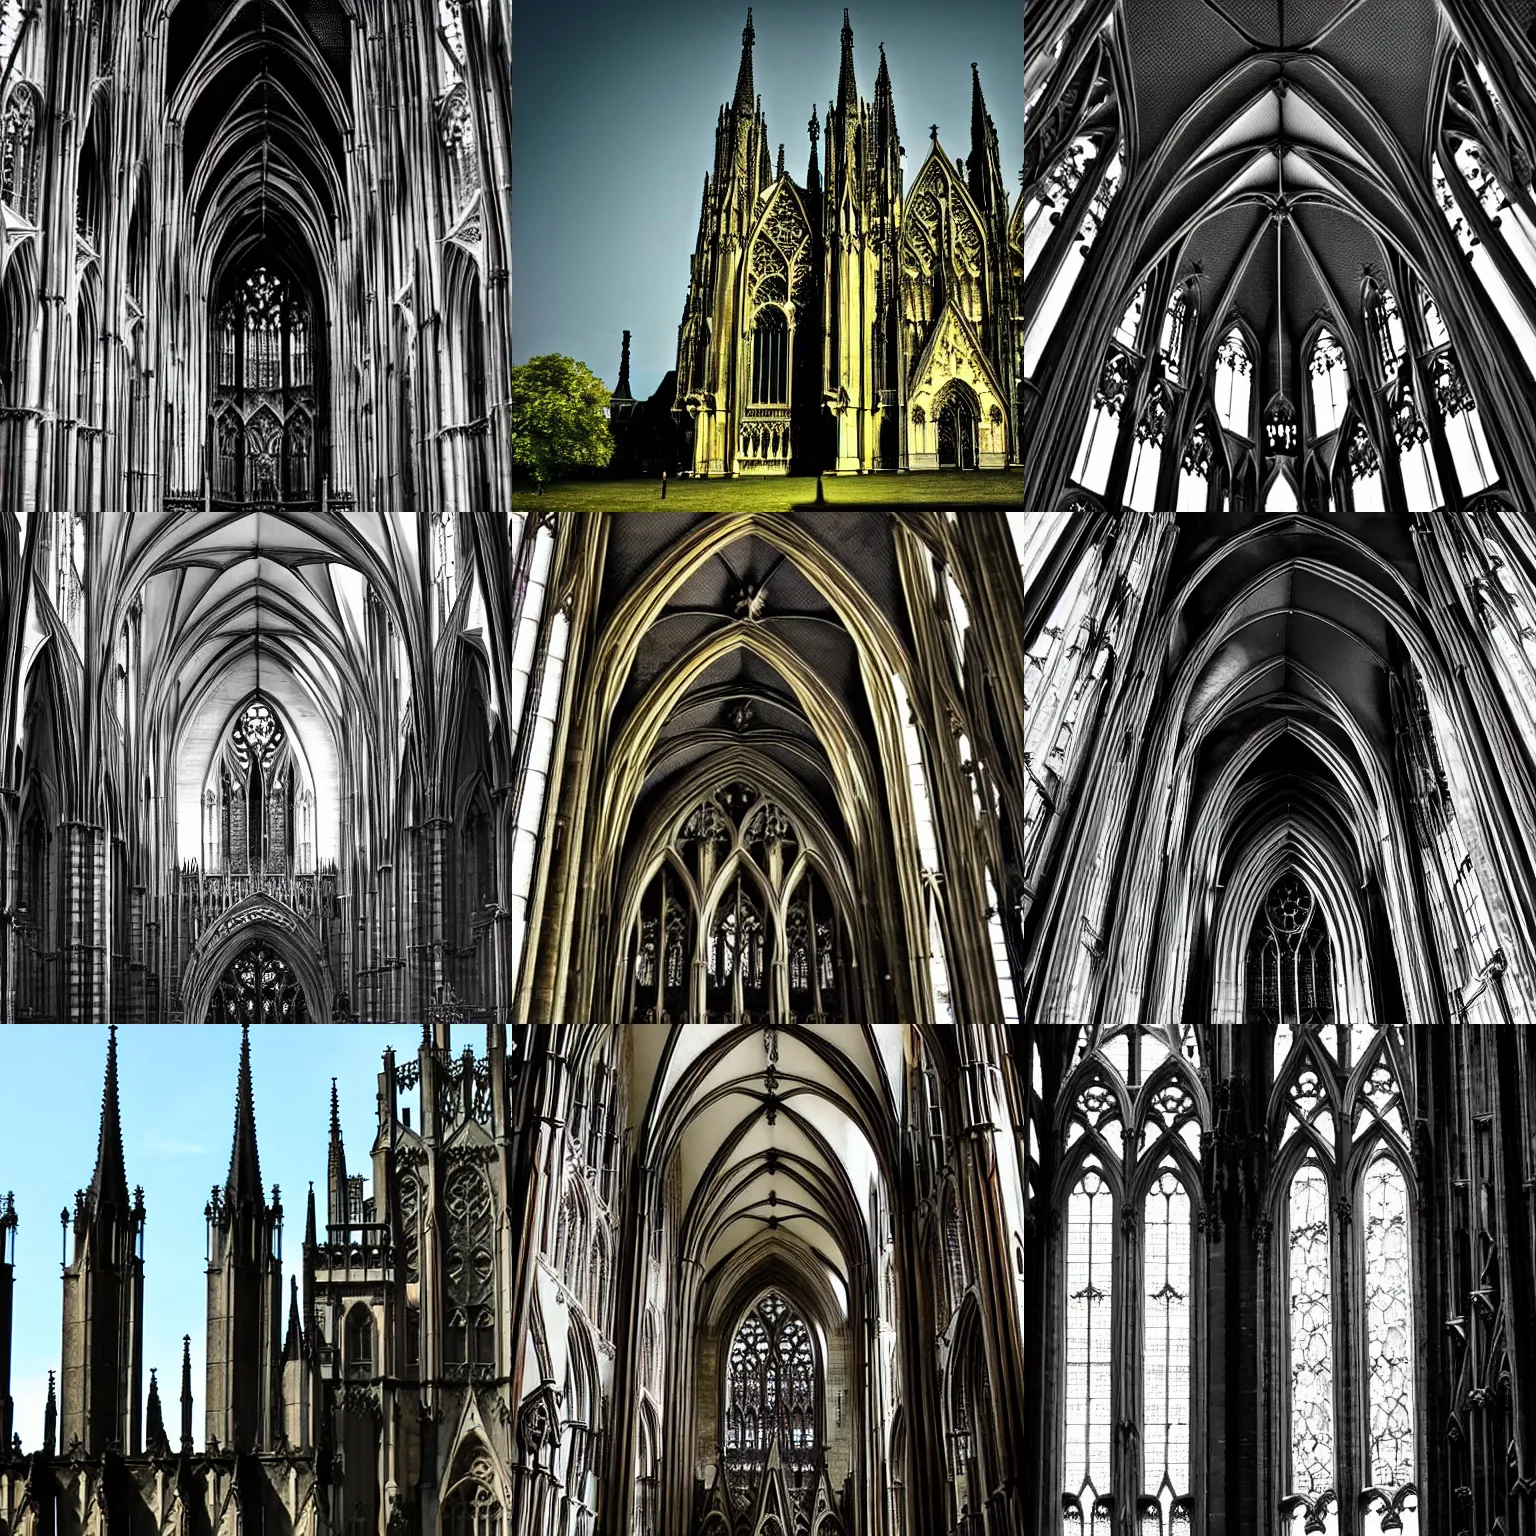 Prompt: Gothic architecture